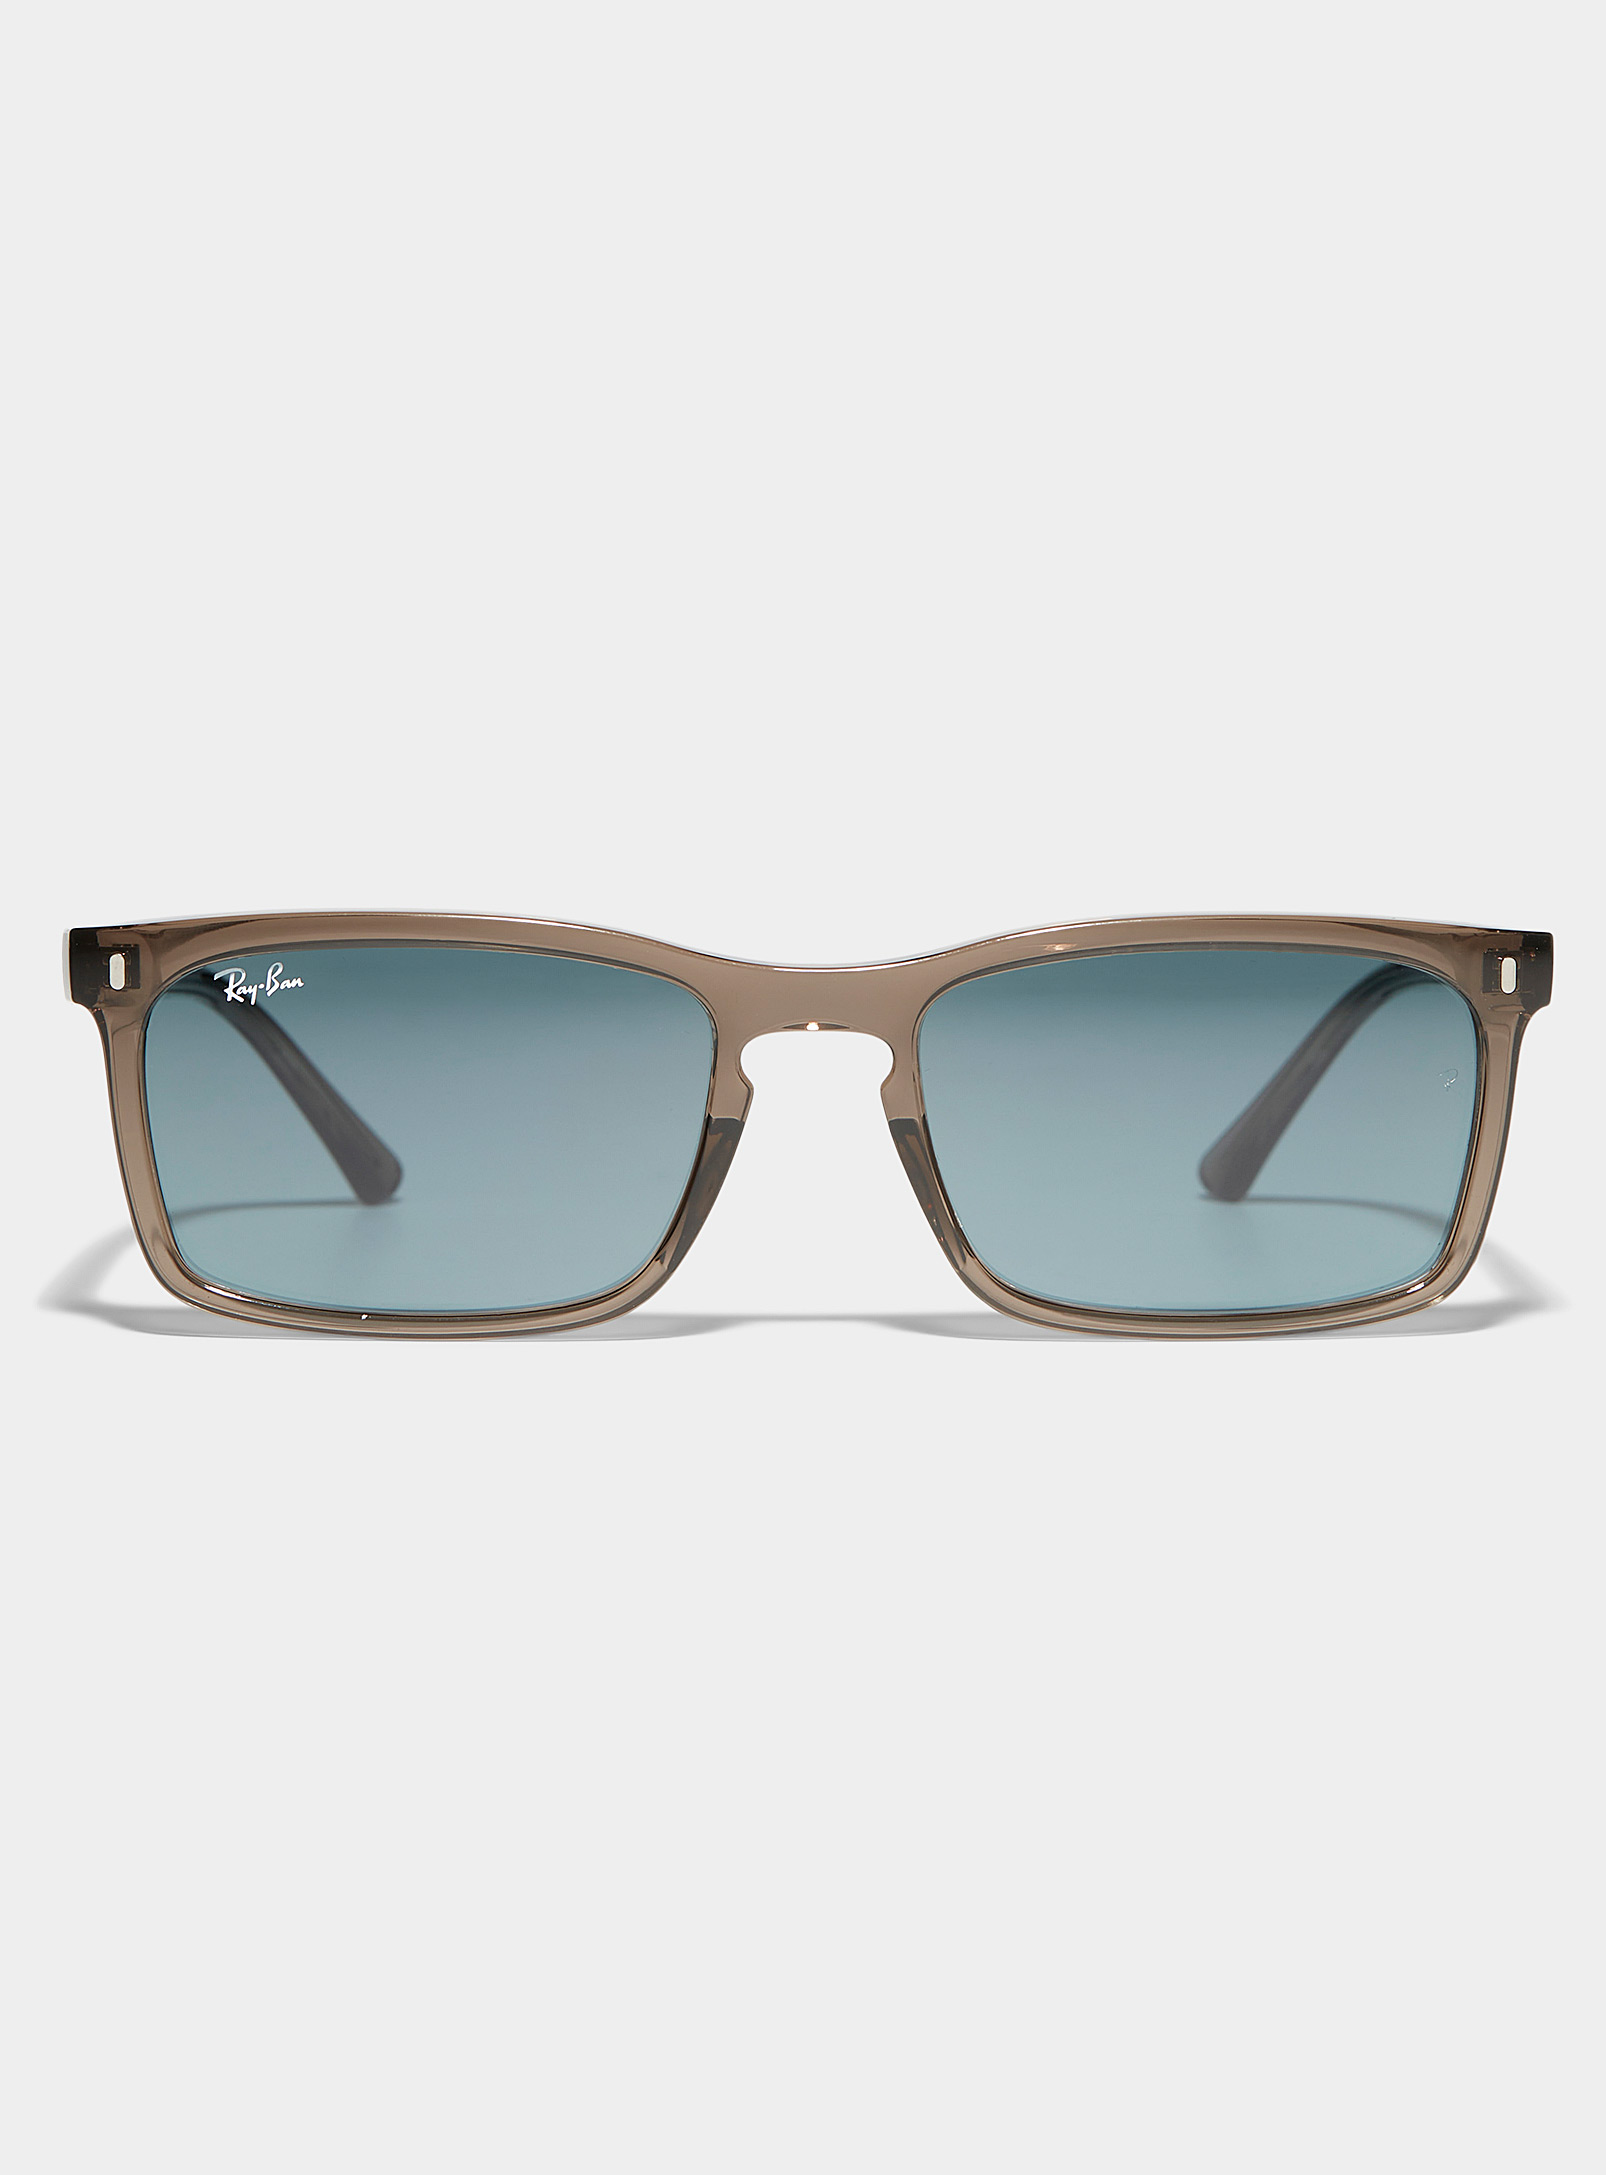 Ray Ban Translucent Brown Rectangular Sunglasses In Gray